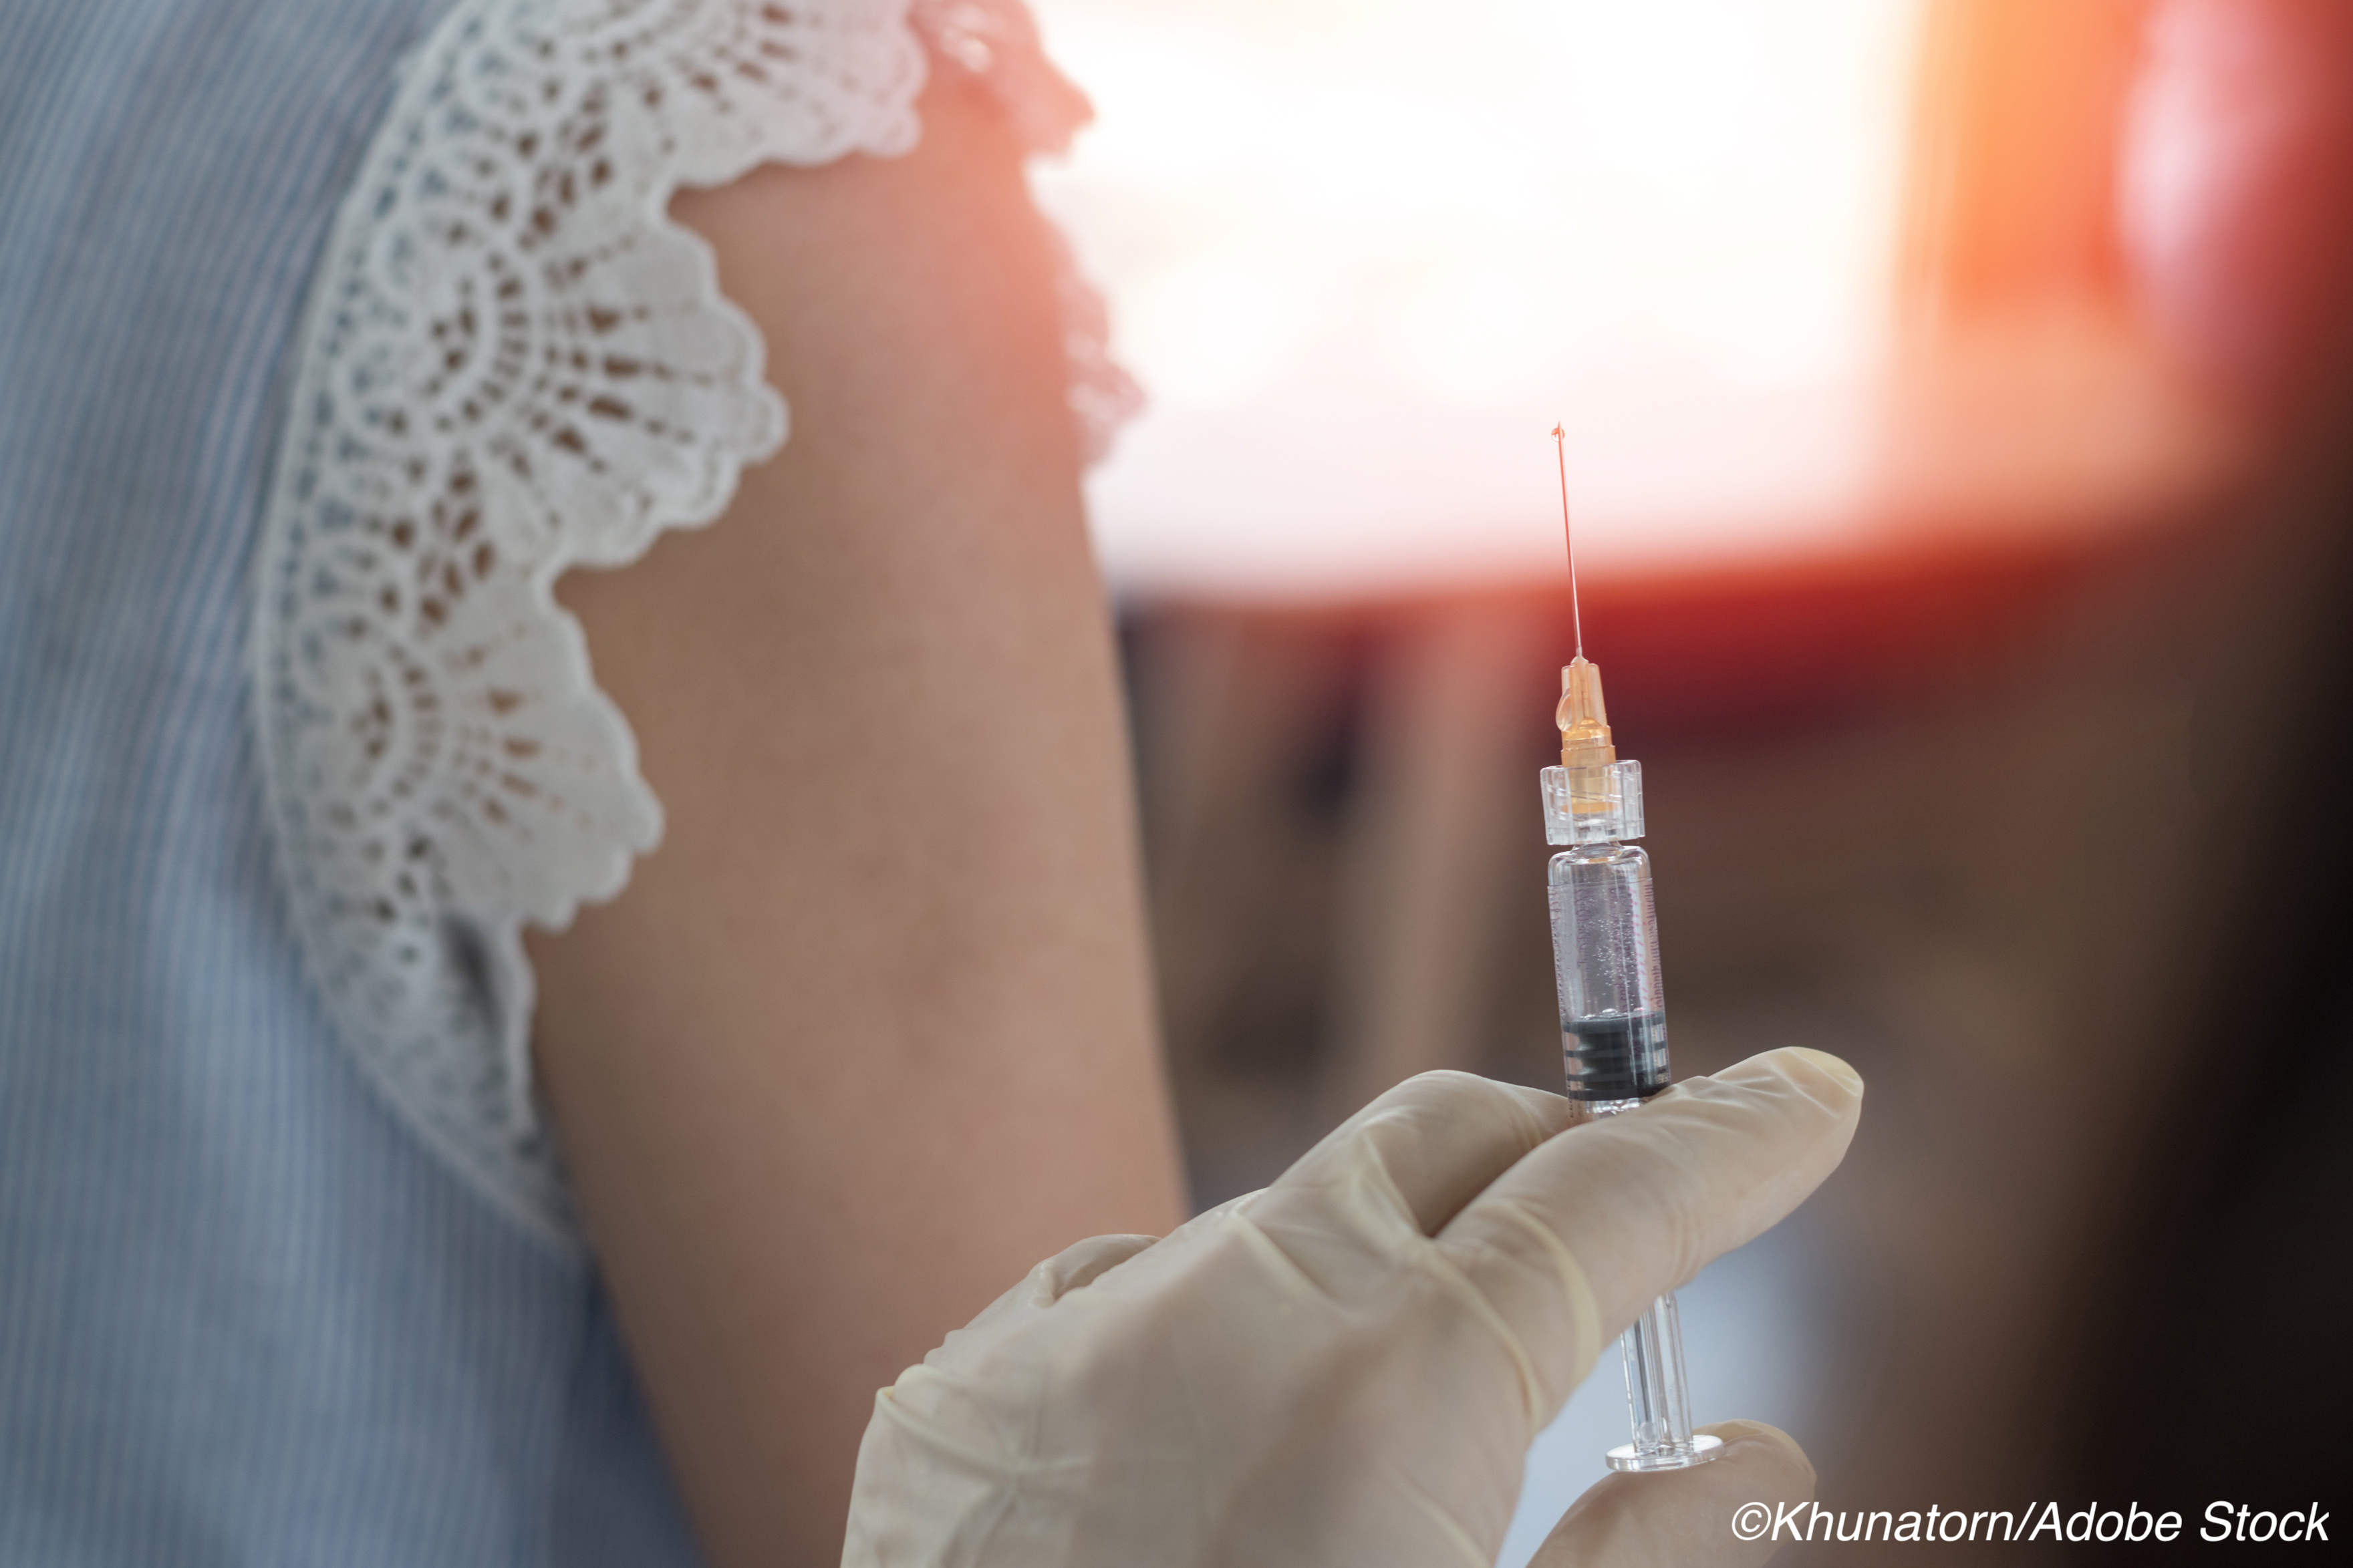 HPV Vaccination Program: Bhutan Make Headway Towards Eliminating Cervical Cancer